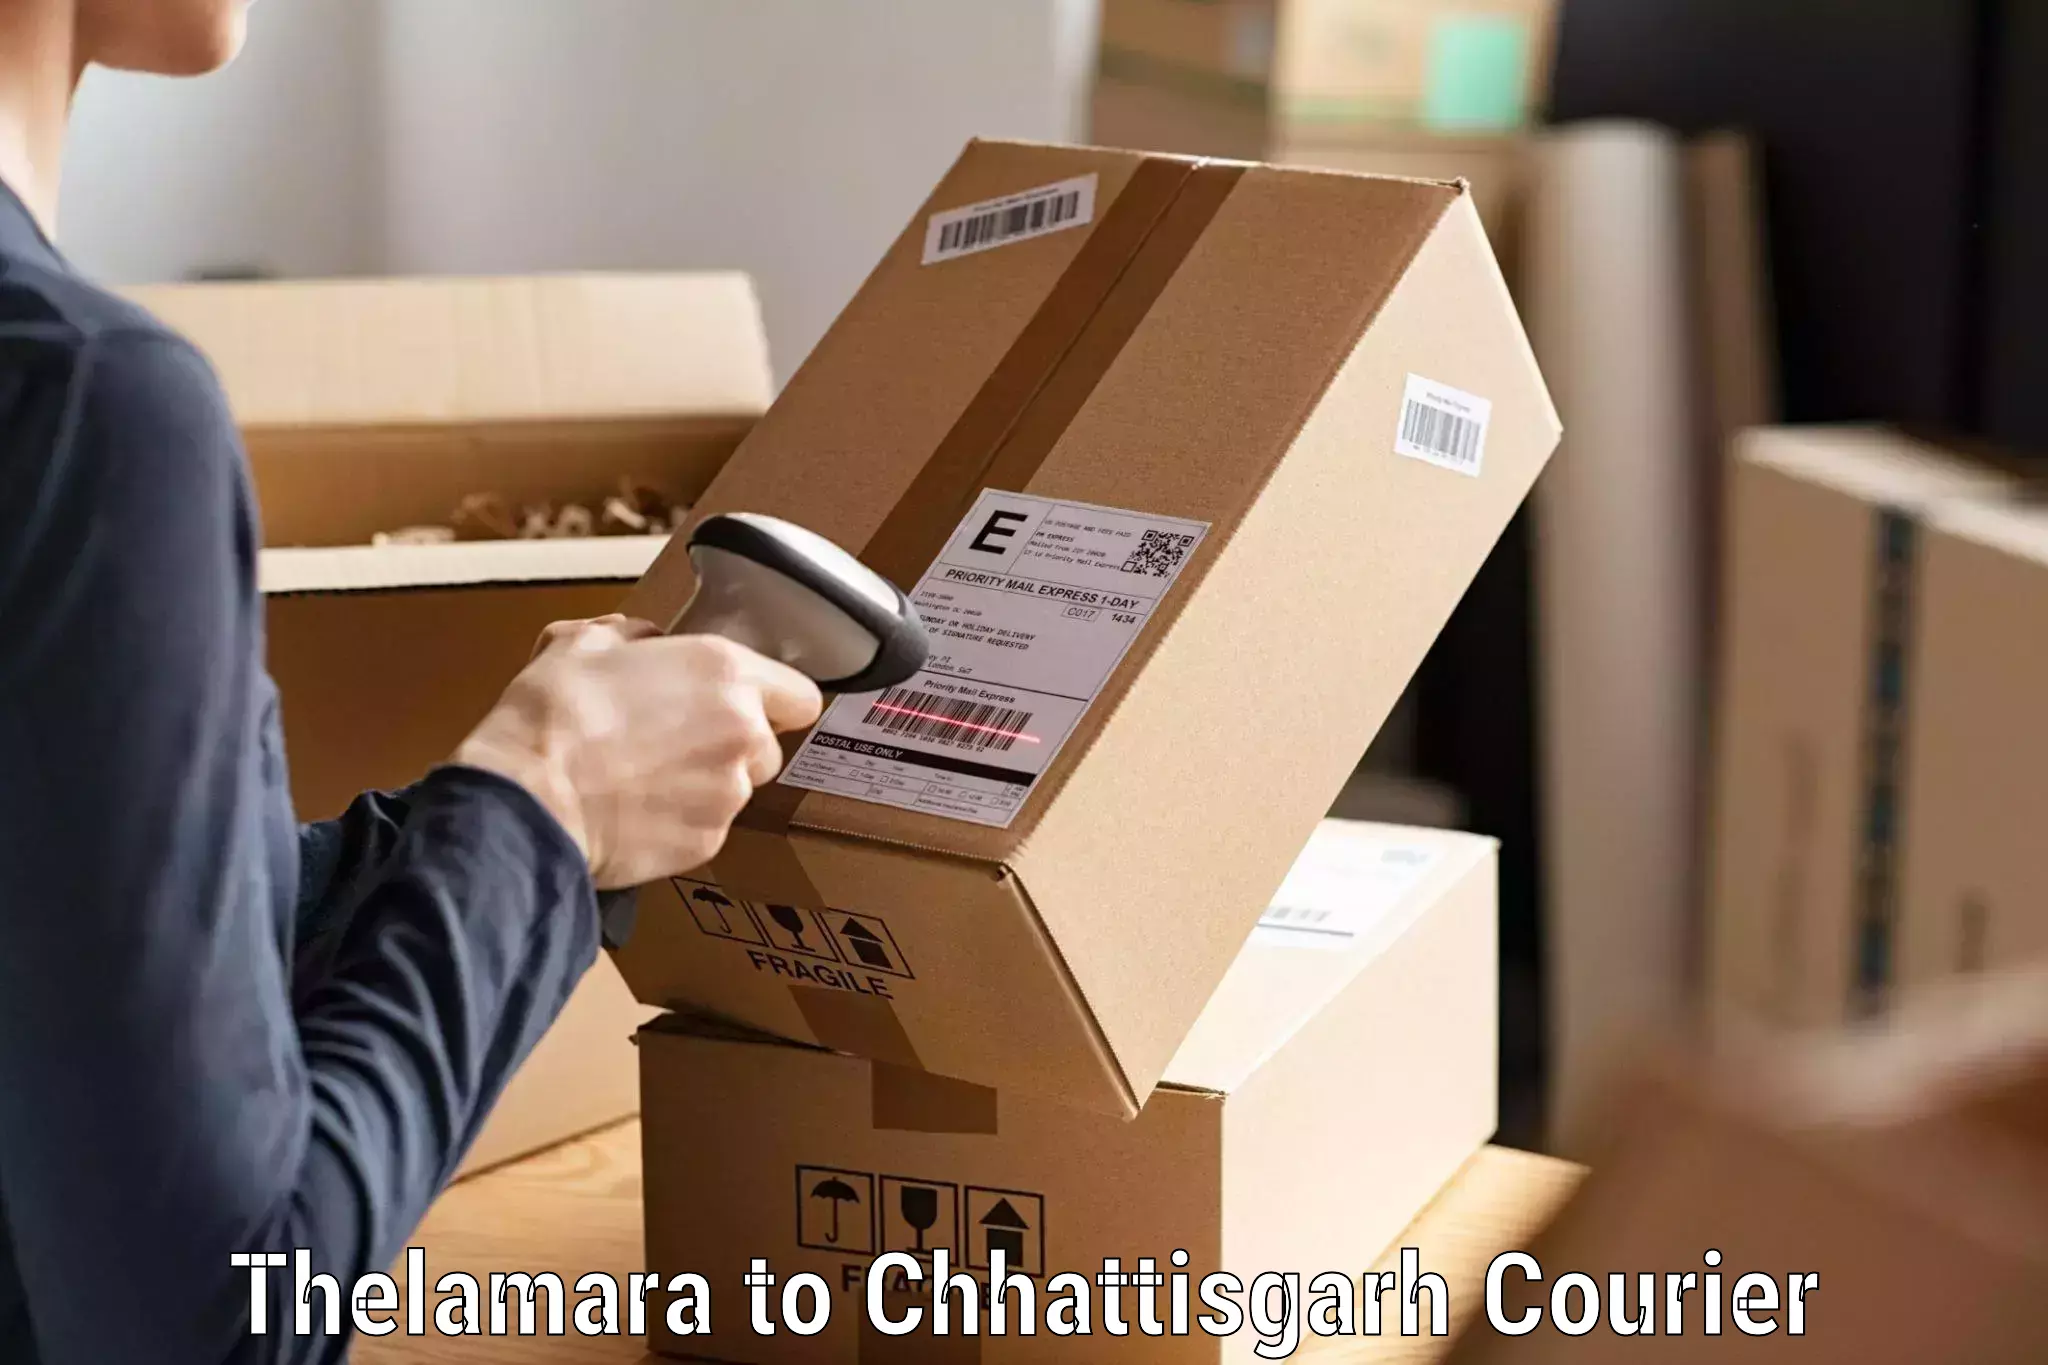 Nationwide shipping capabilities Thelamara to Berla